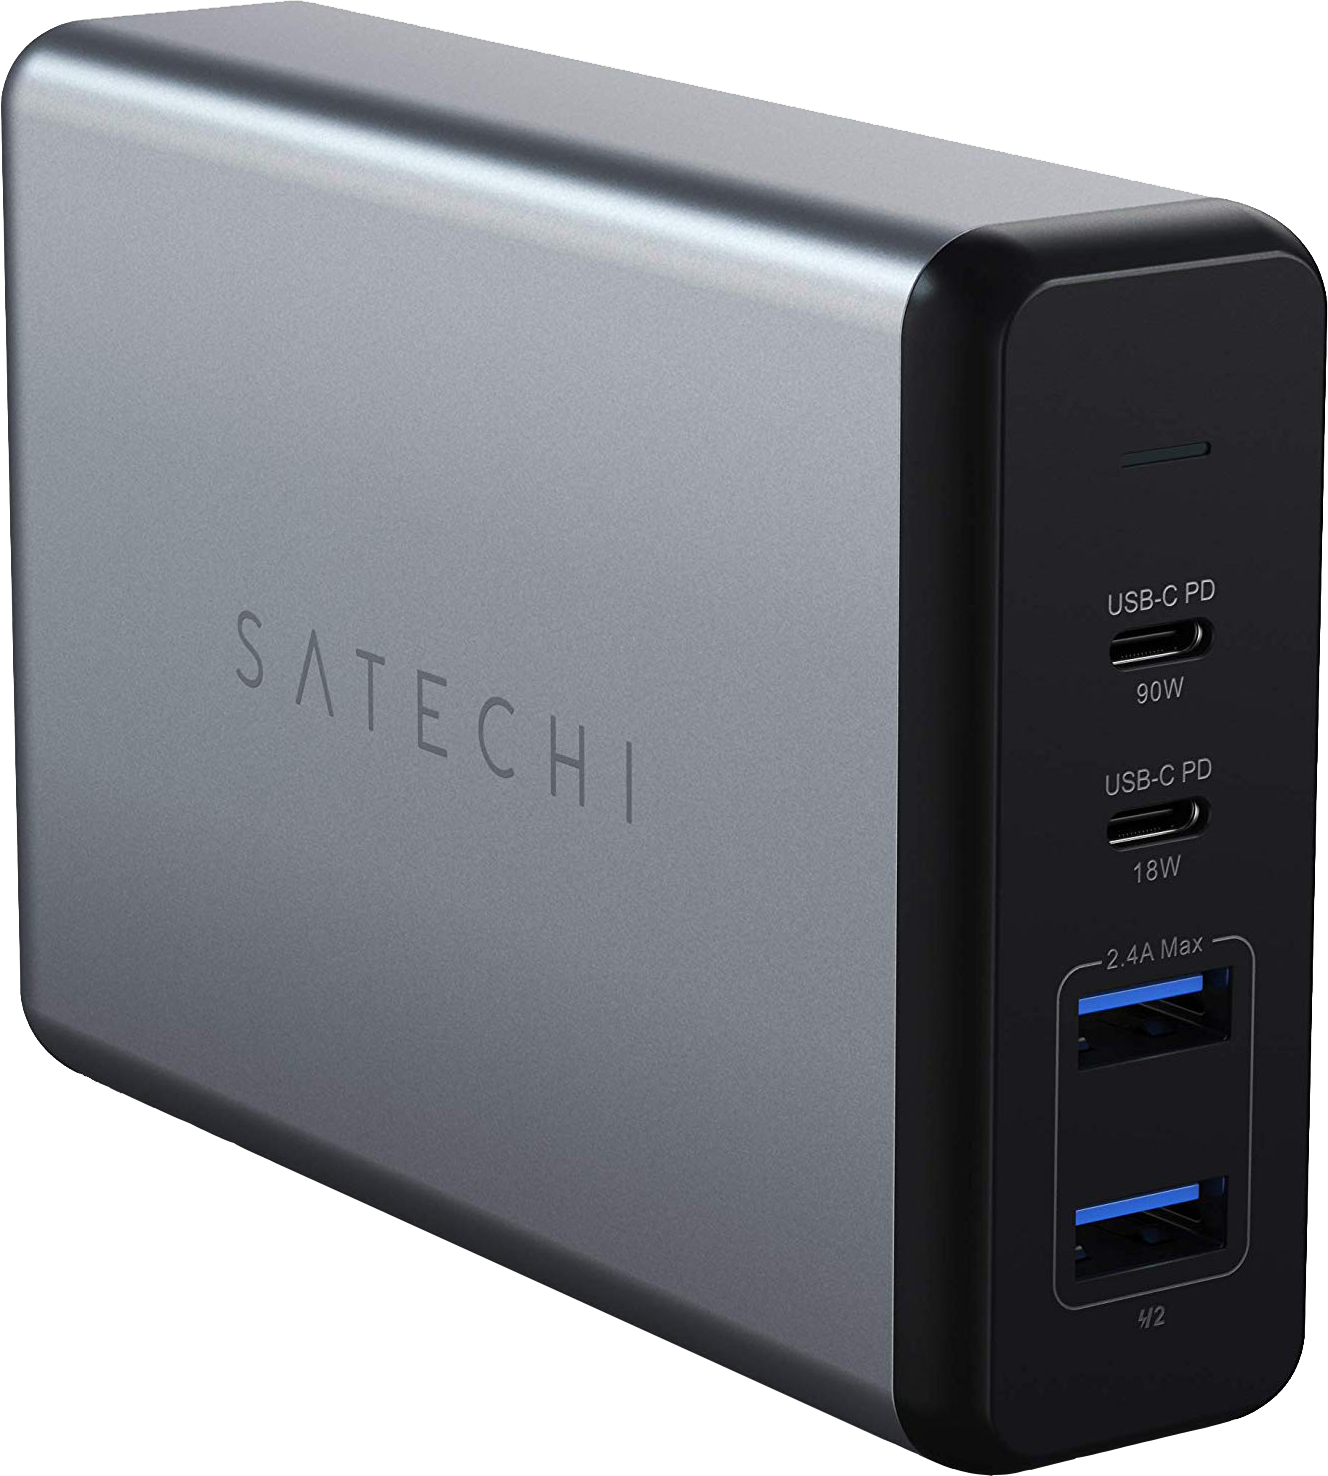  Satechi 108W Pro USB-C PD Desktop Charger - 2 USB-C PD & 2 USB-A Ports